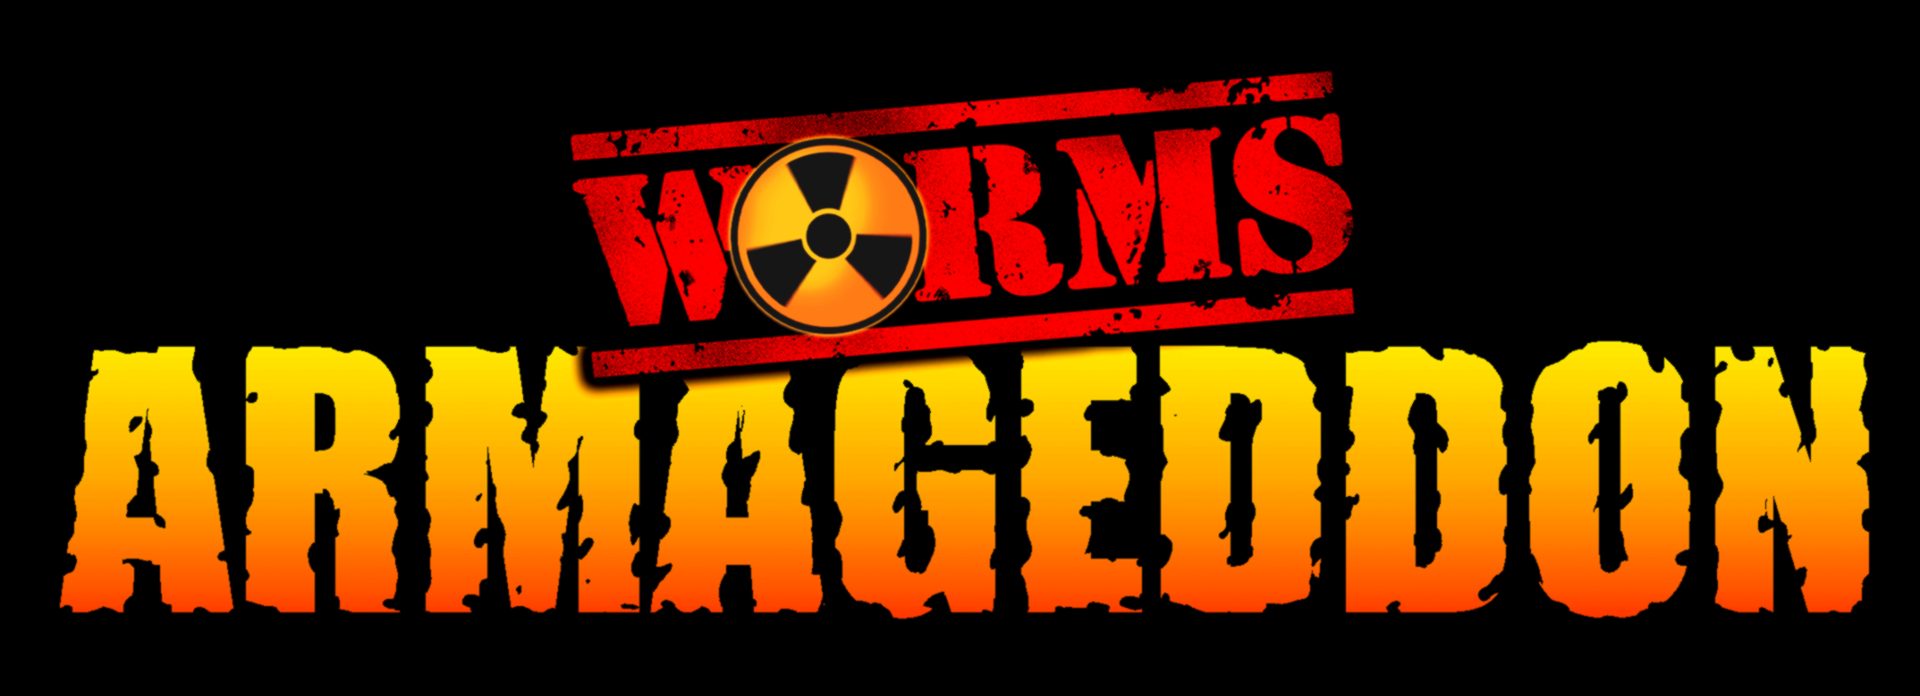 http://img2.wikia.nocookie.net/__cb20120714153812/logopedia/images/b/b7/Worms_Armageddon.jpg